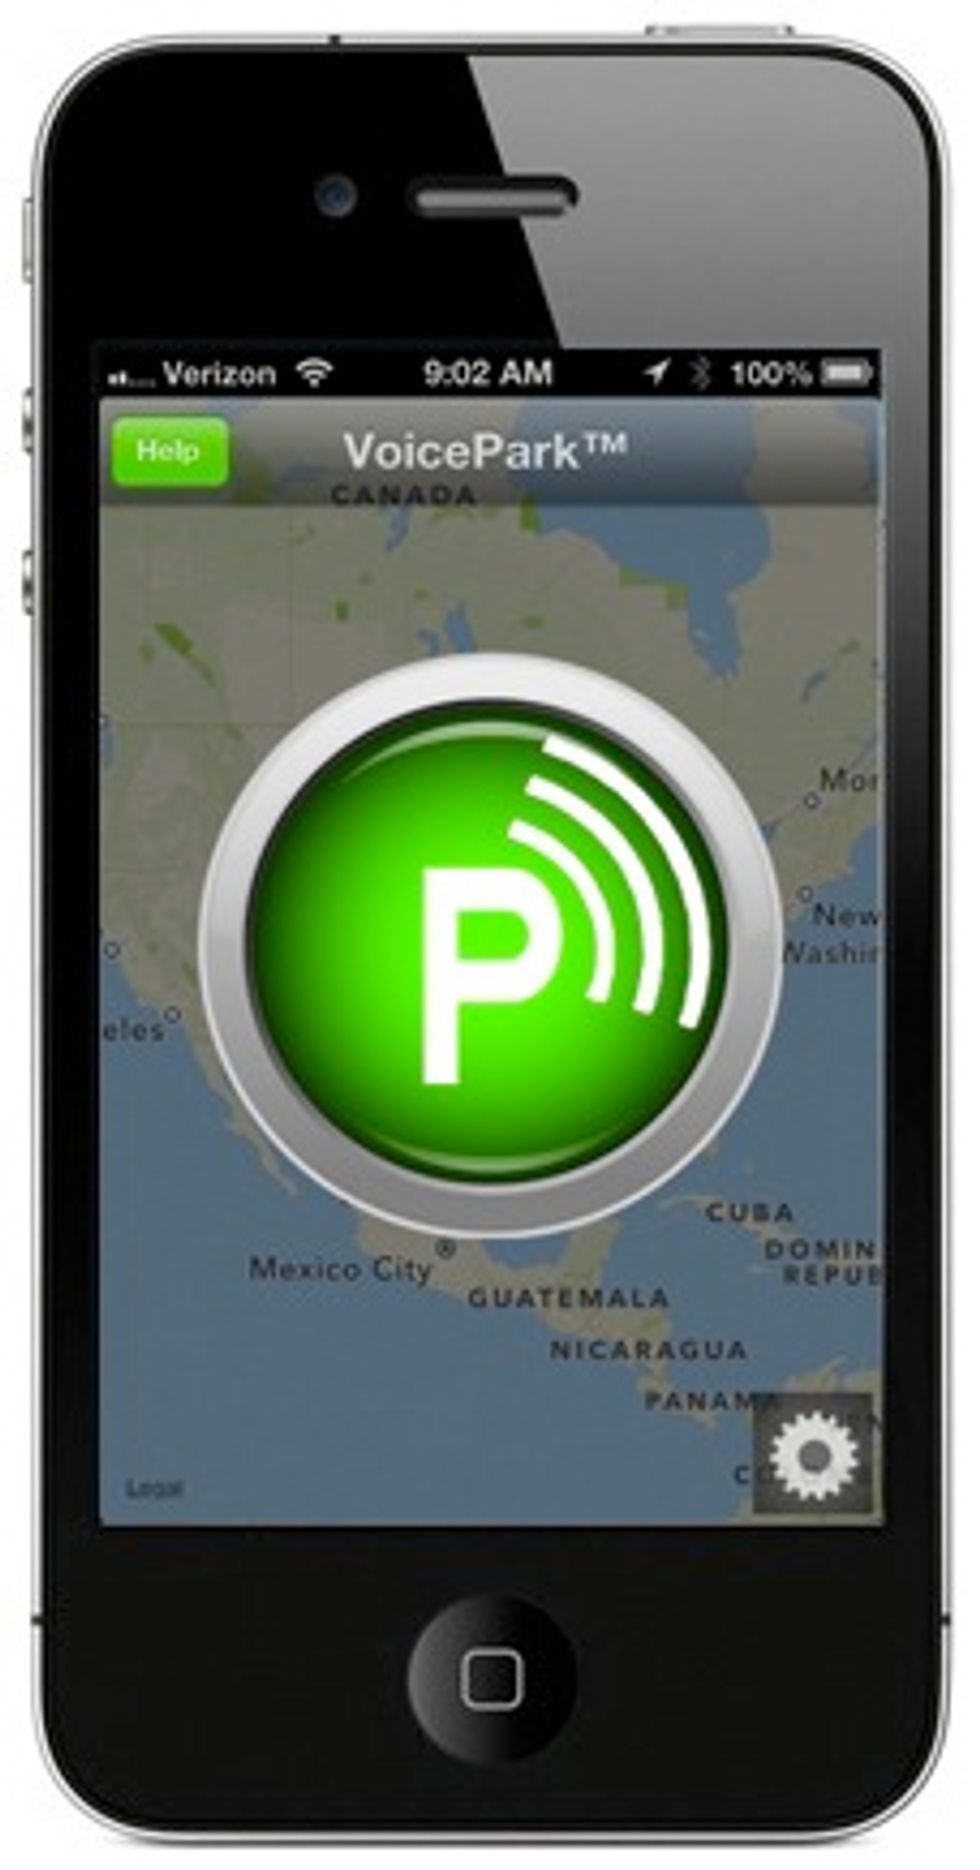 Our Parking Guru Talks the Latest Version of His Parking App, VoicePark